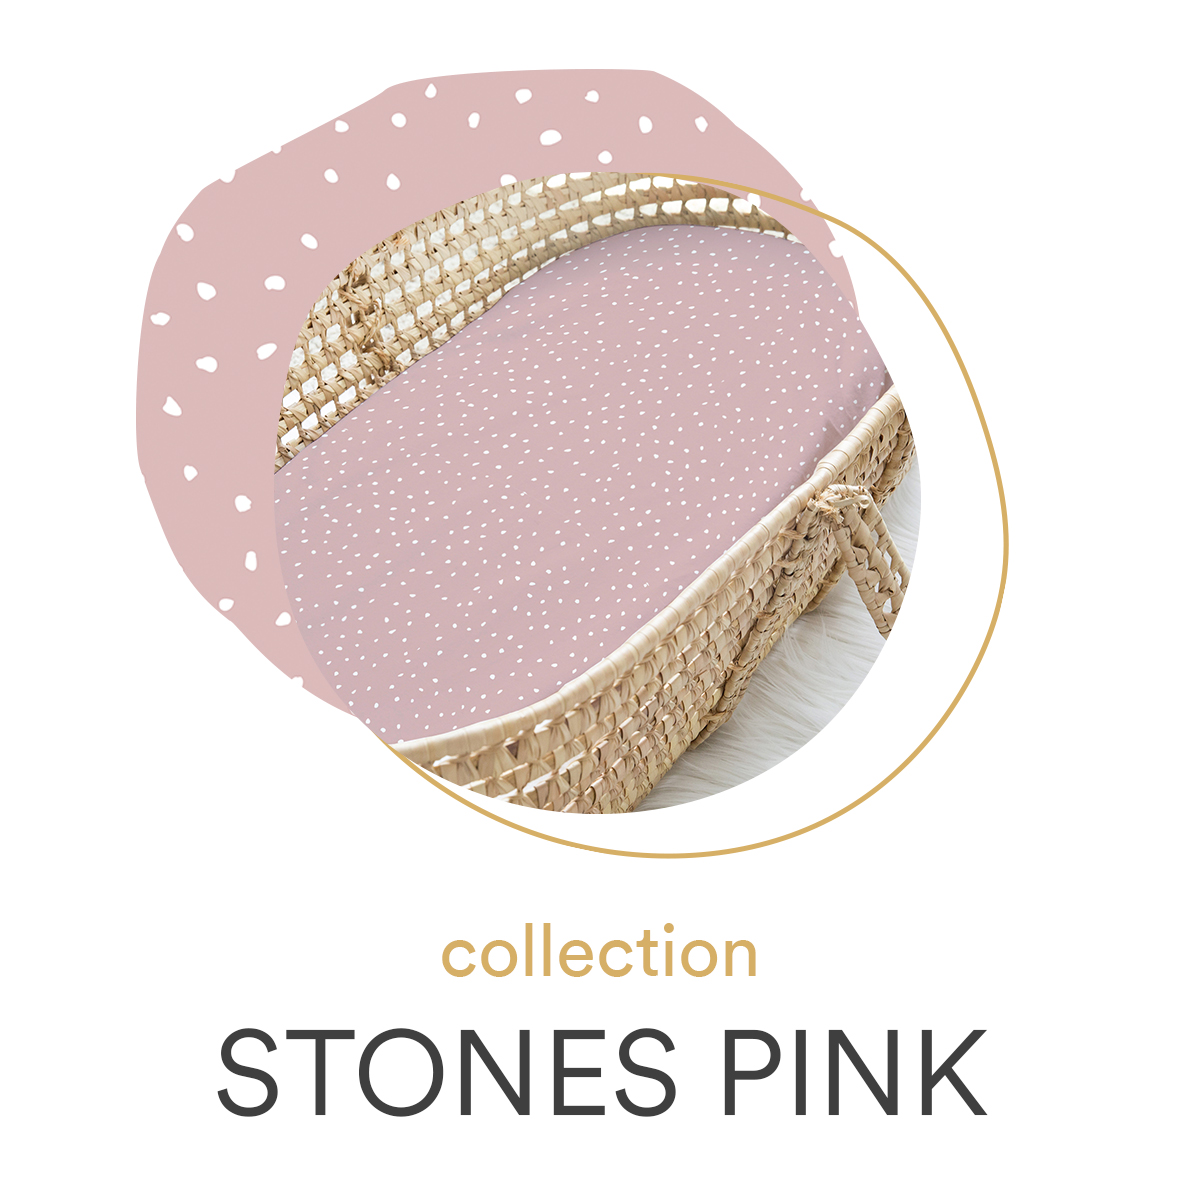 Stones pink